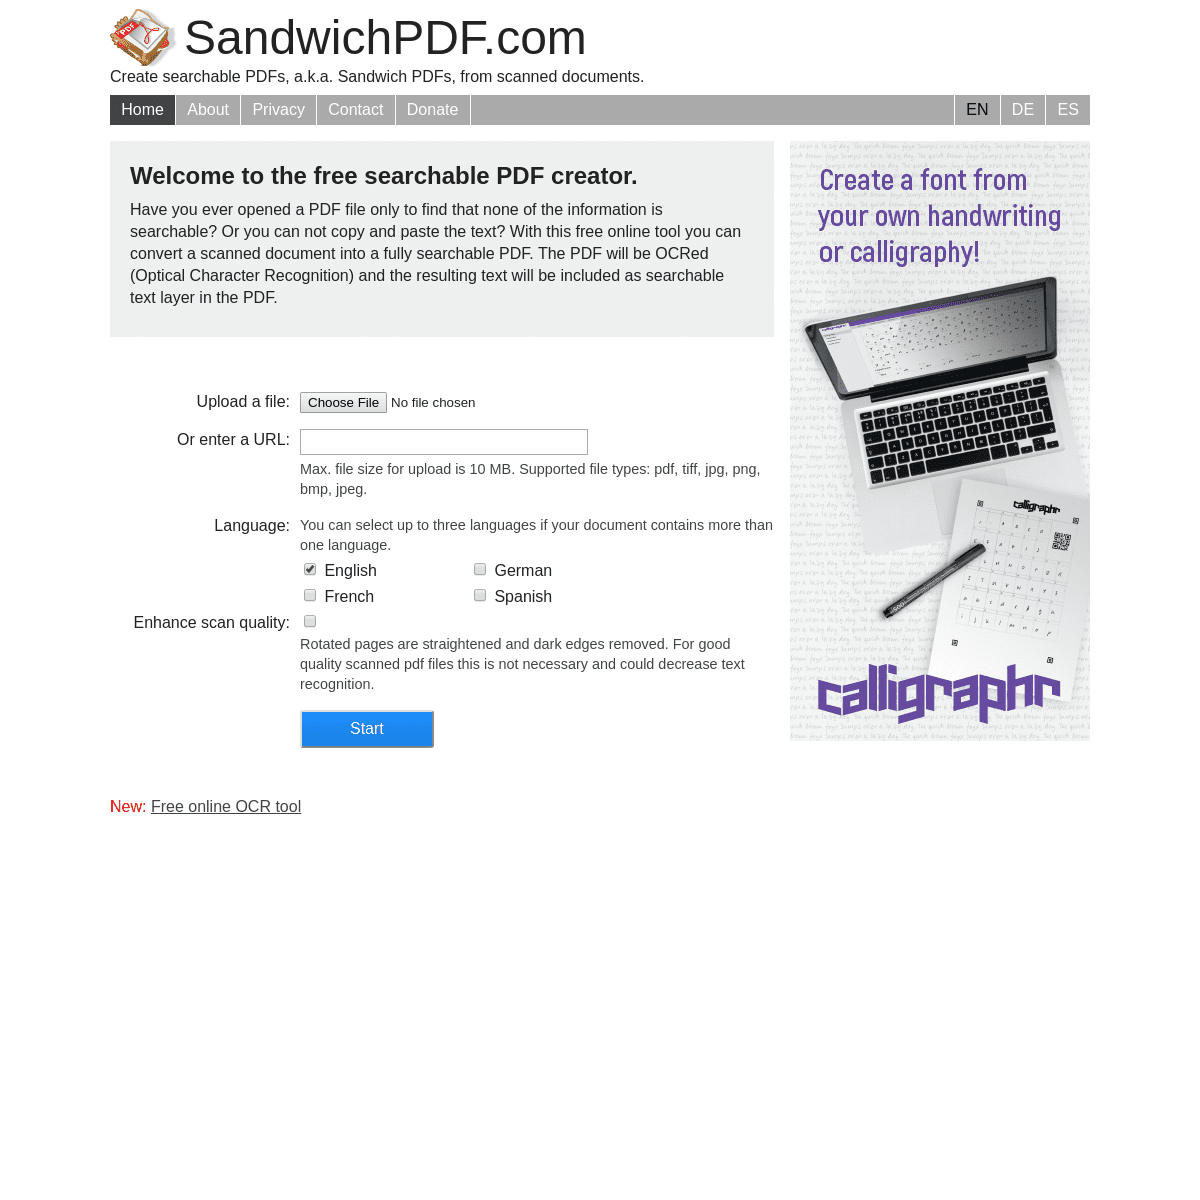 A complete backup of sandwichpdf.com